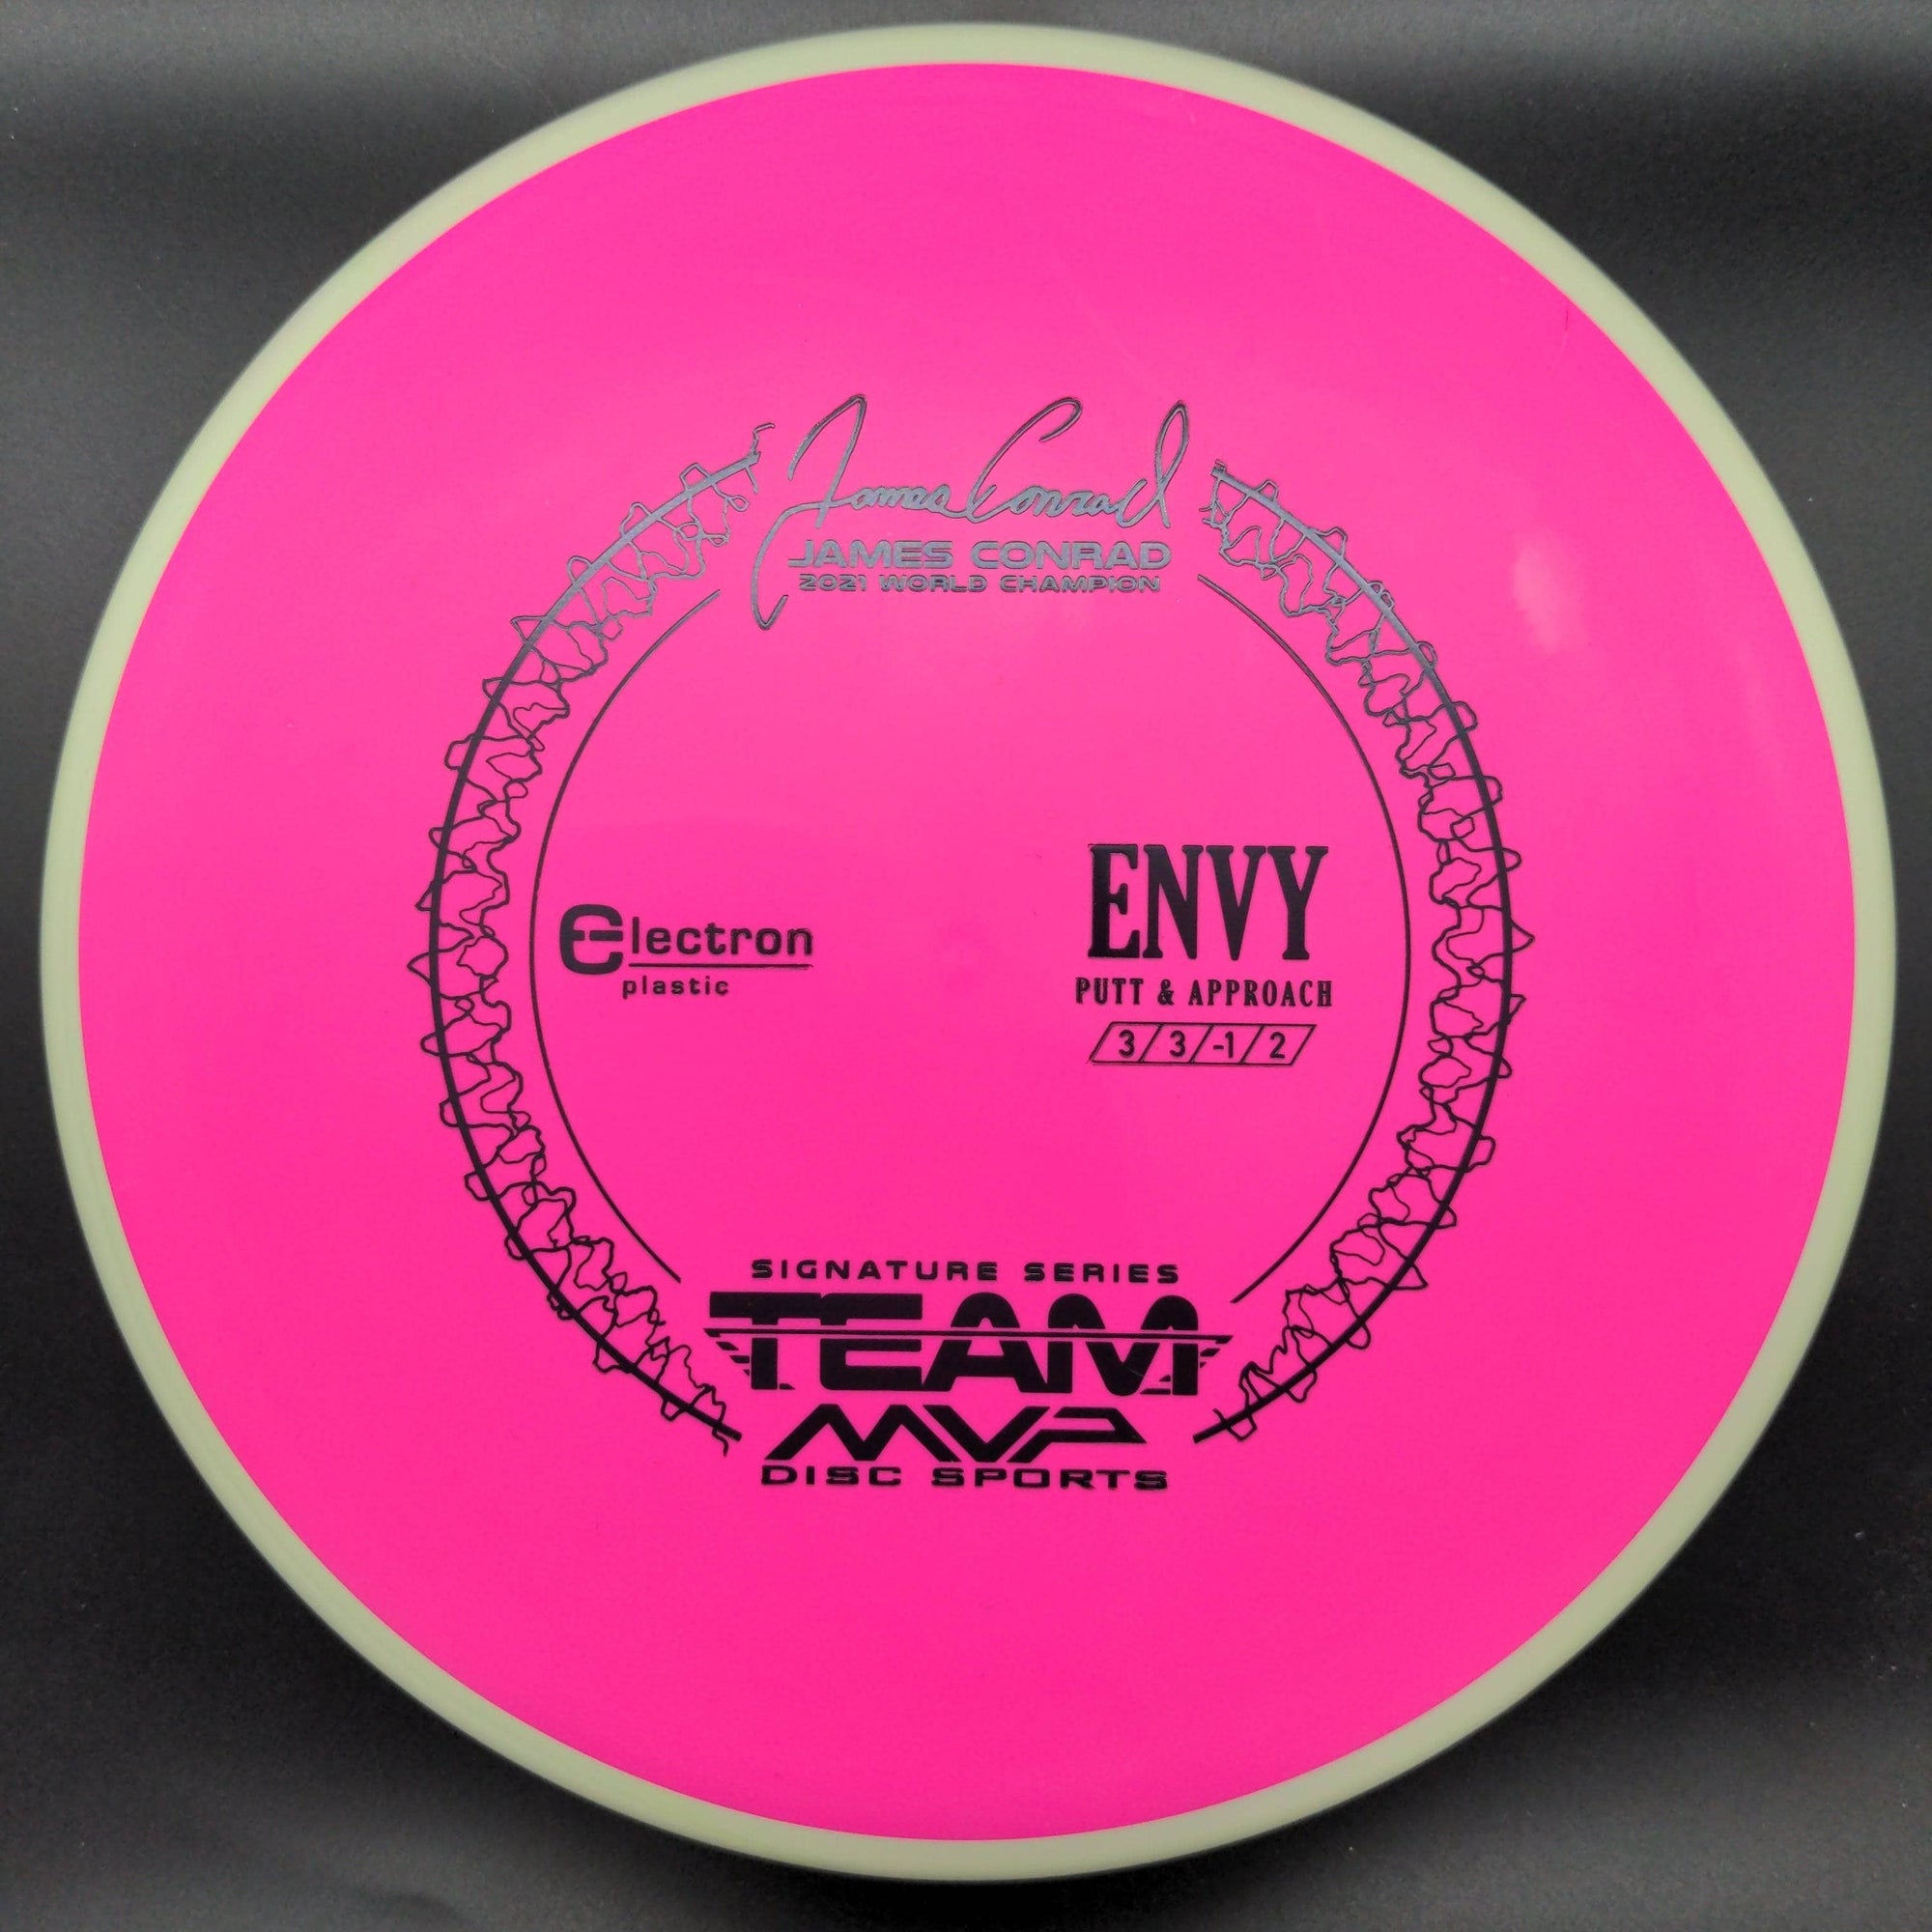 MVP Putter White/Yellow Rim Pink Plate 175g Envy, Electron Medium, James Conrad Signature